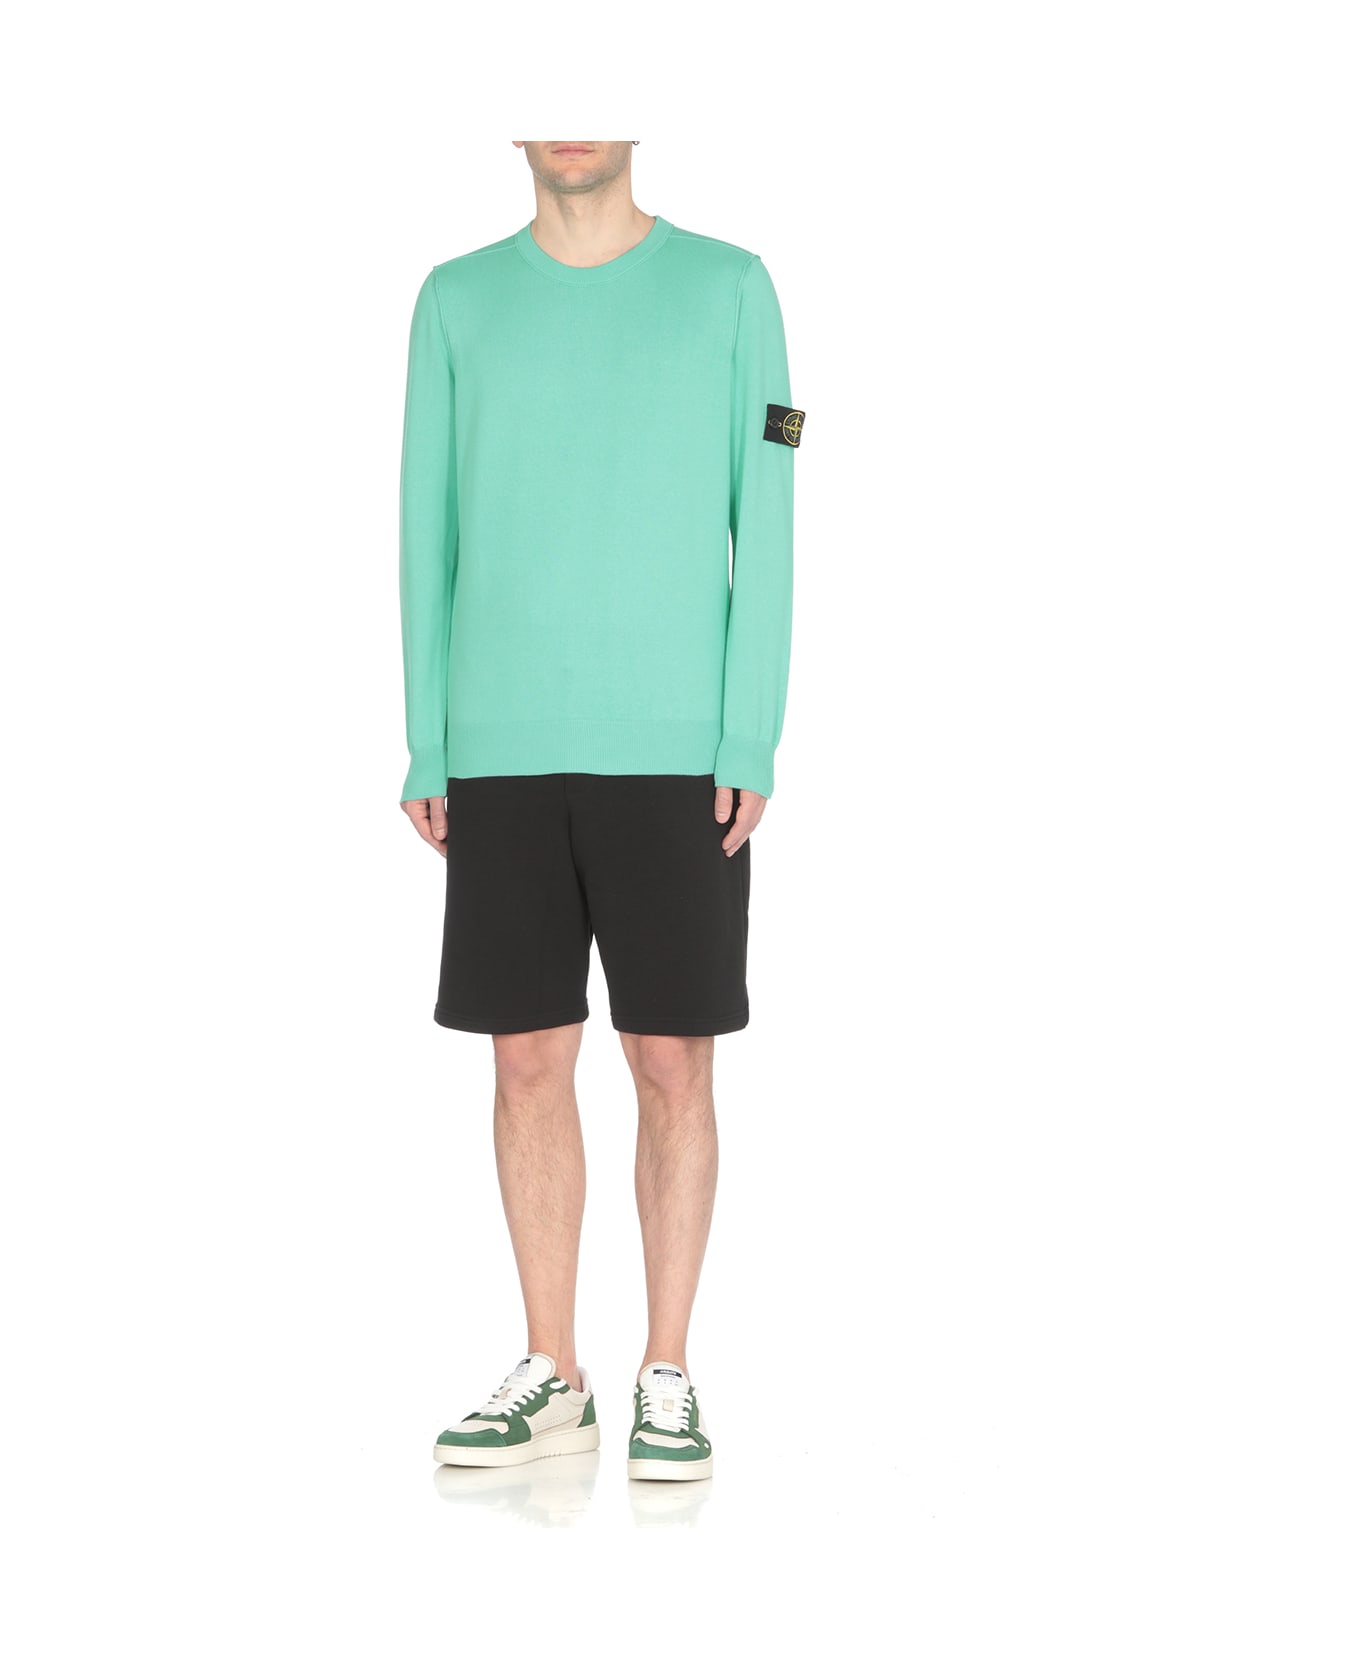 Stone Island Cotton Sweater - Verde chiaro ニットウェア